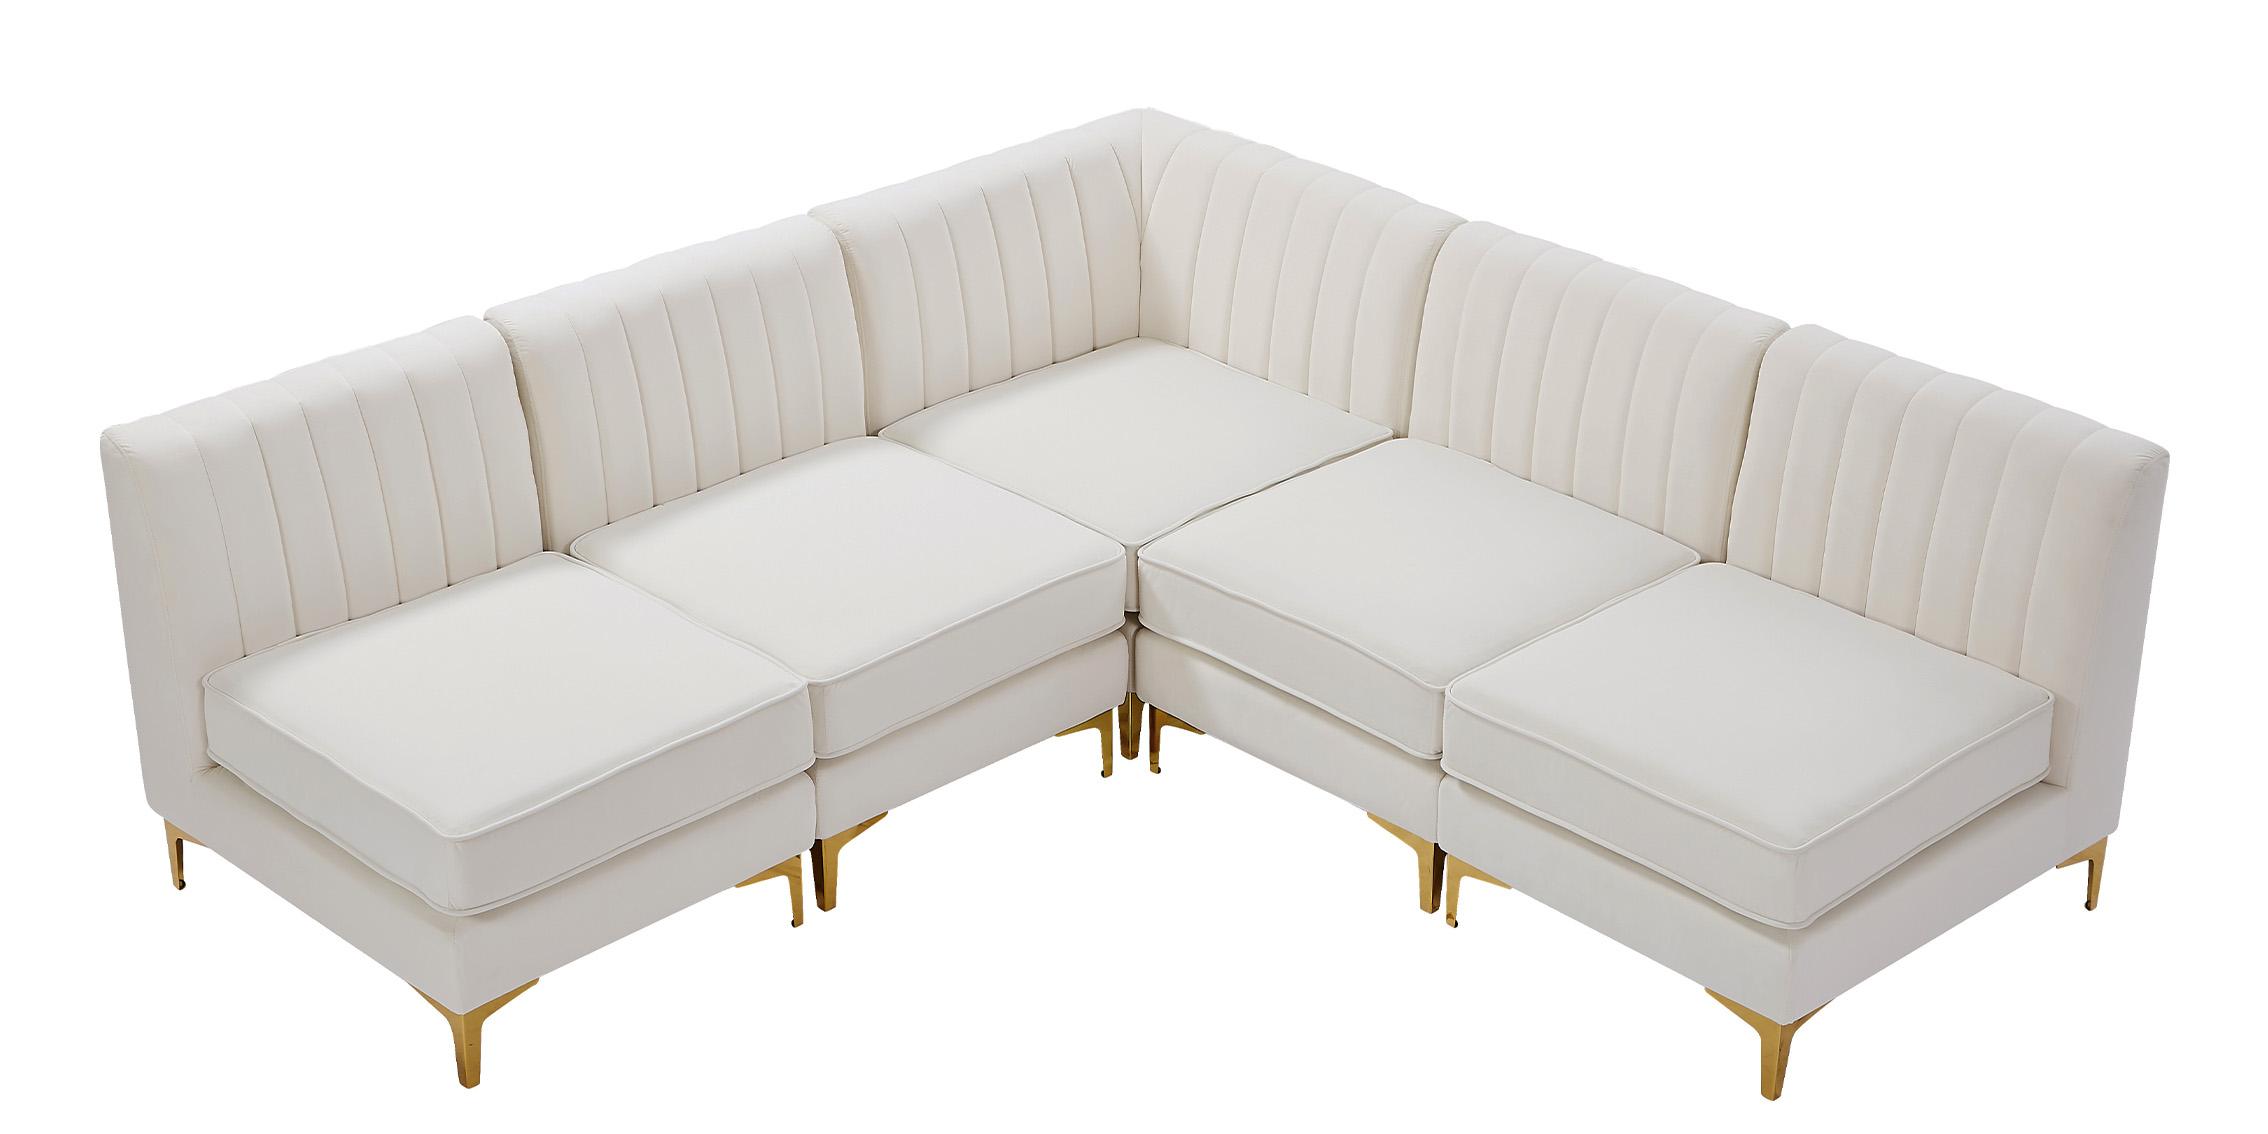 

    
Meridian Furniture ALINA 604Cream-Sec5A Modular Sectional Sofa Cream 604Cream-Sec5A
